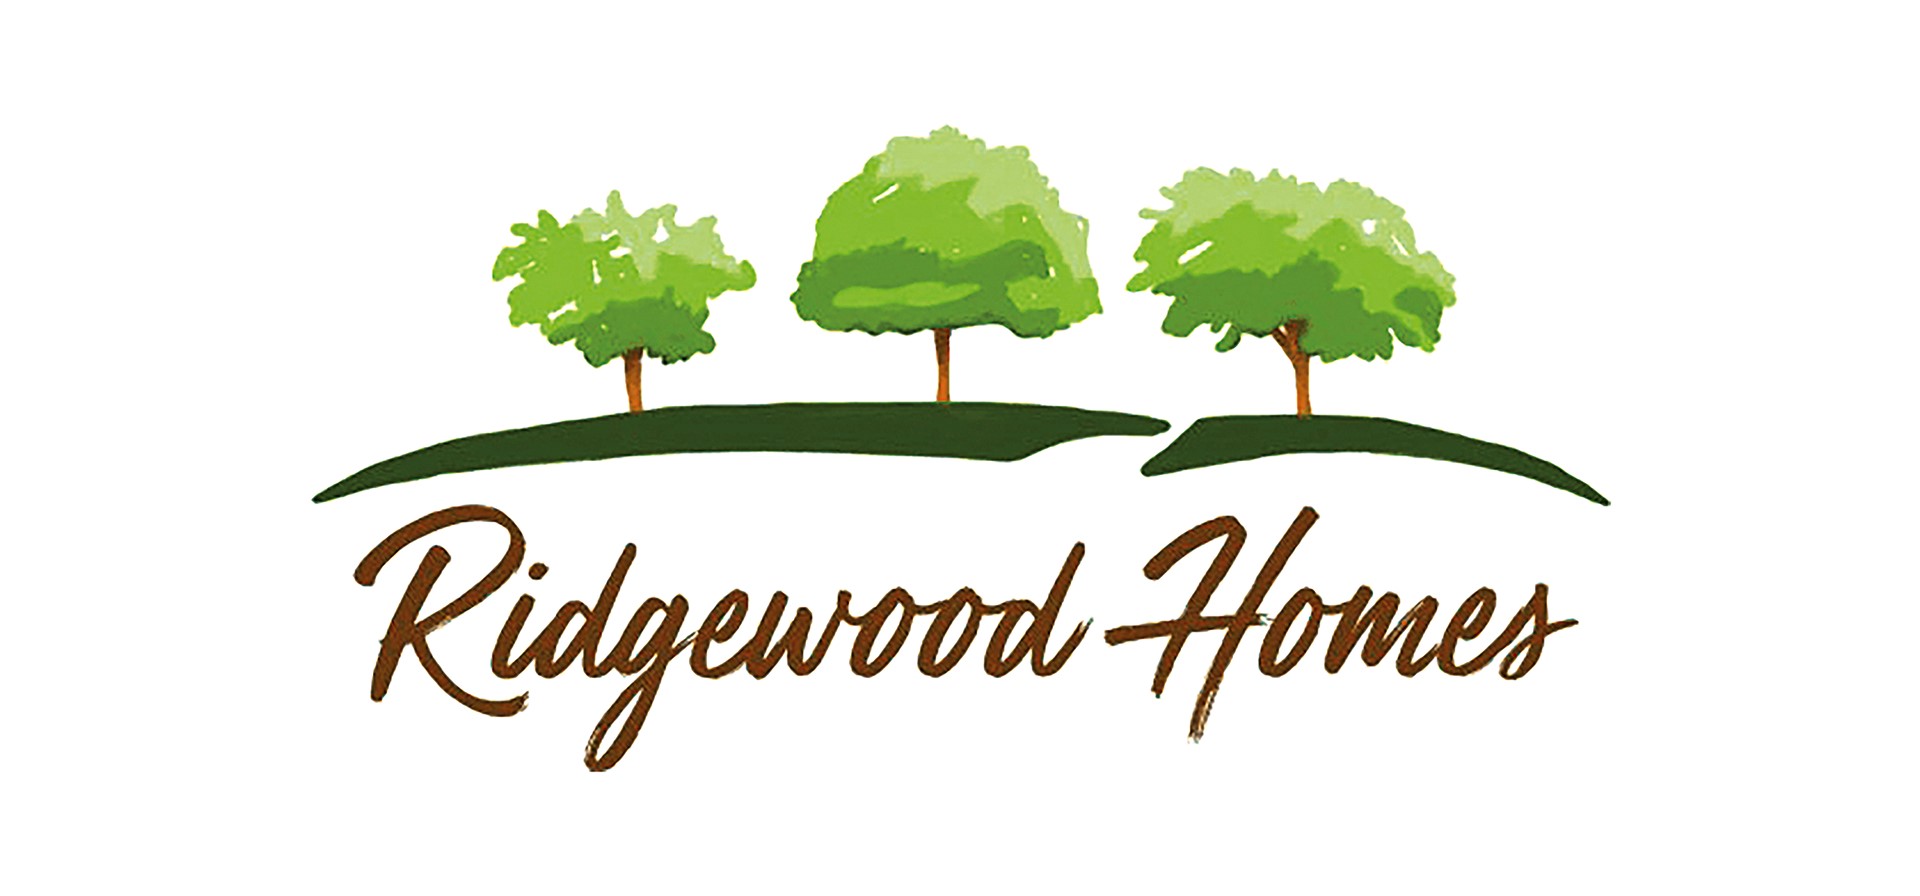 Ridgewood Homes 